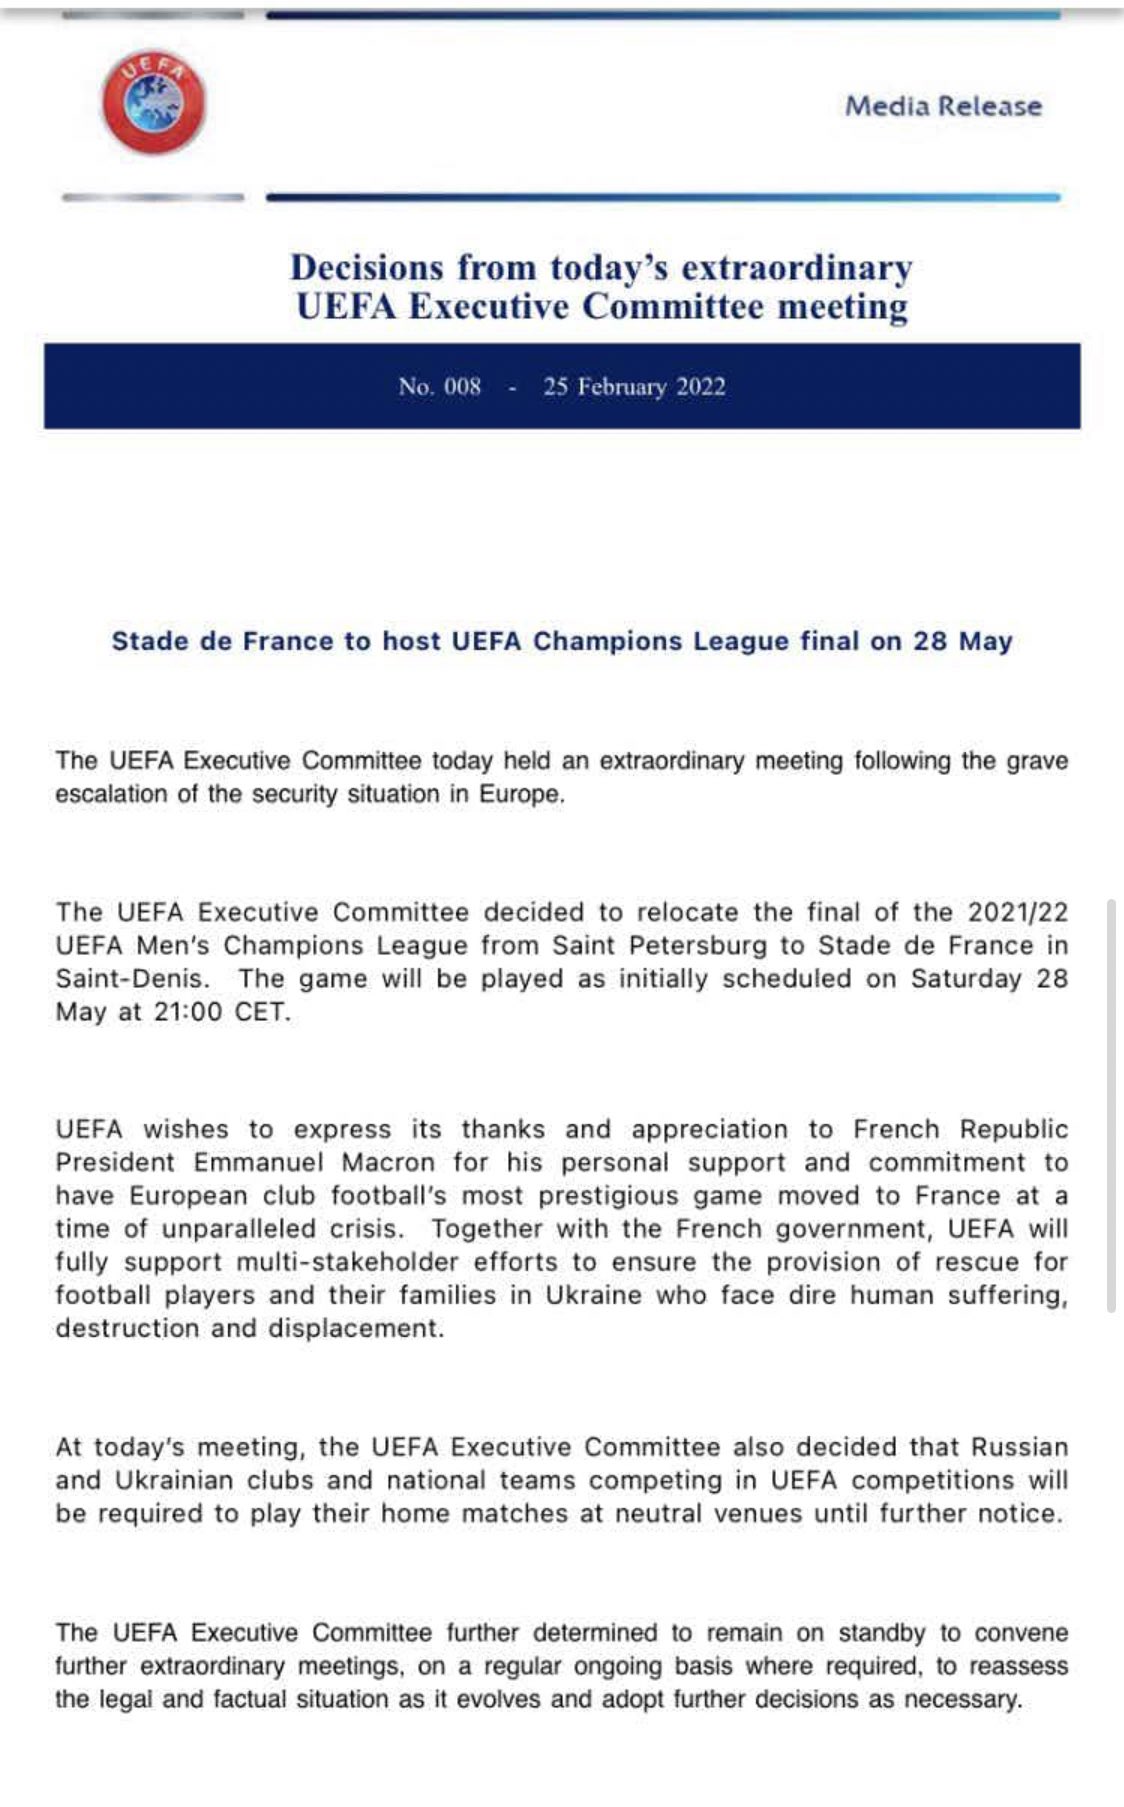 nota de prensa de la UEFA final de Champions 2022